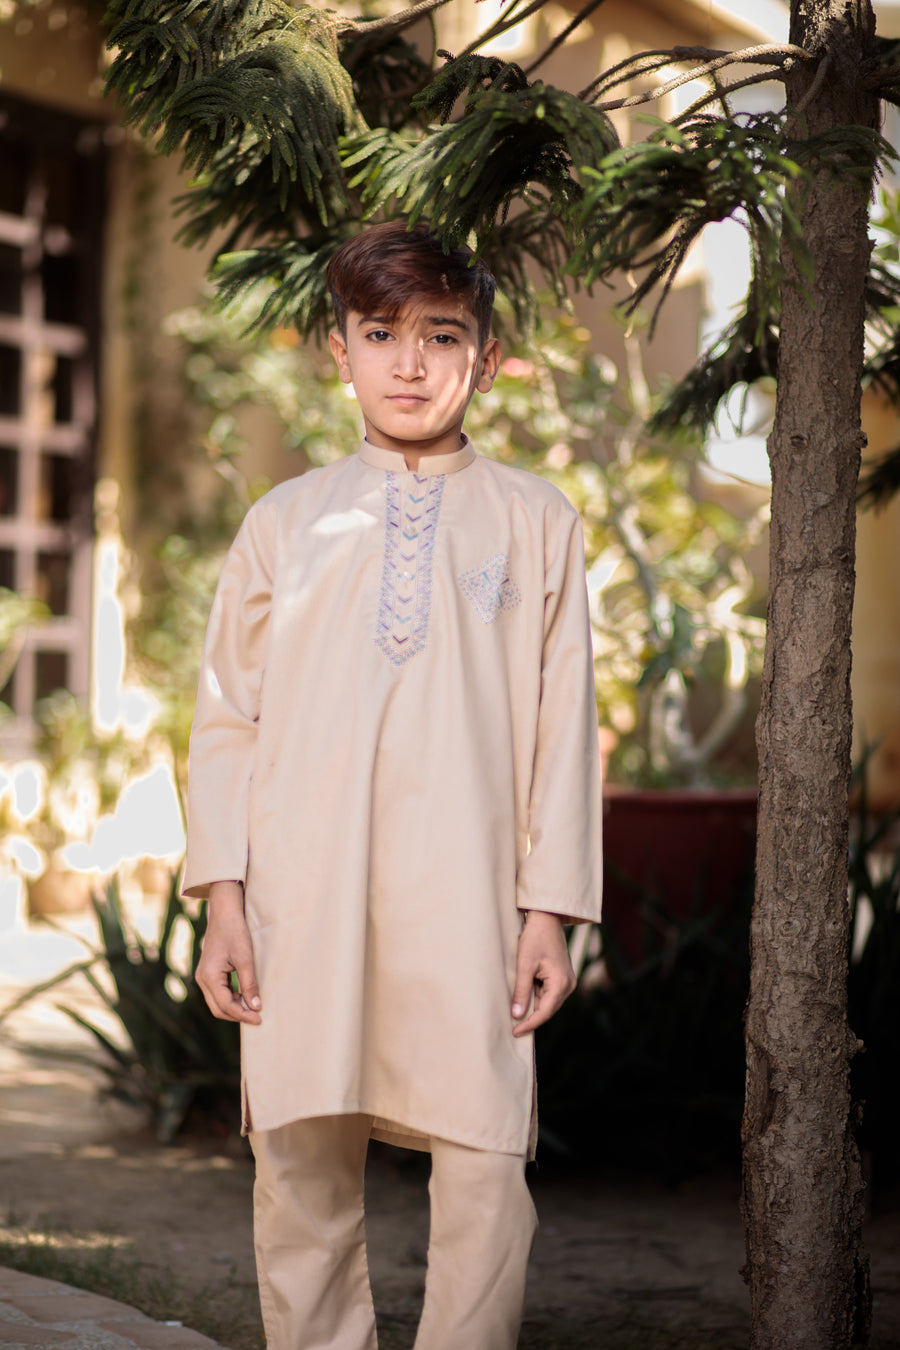 Men's Punjabi/Pathani Kurta Pajama Set – Sarang